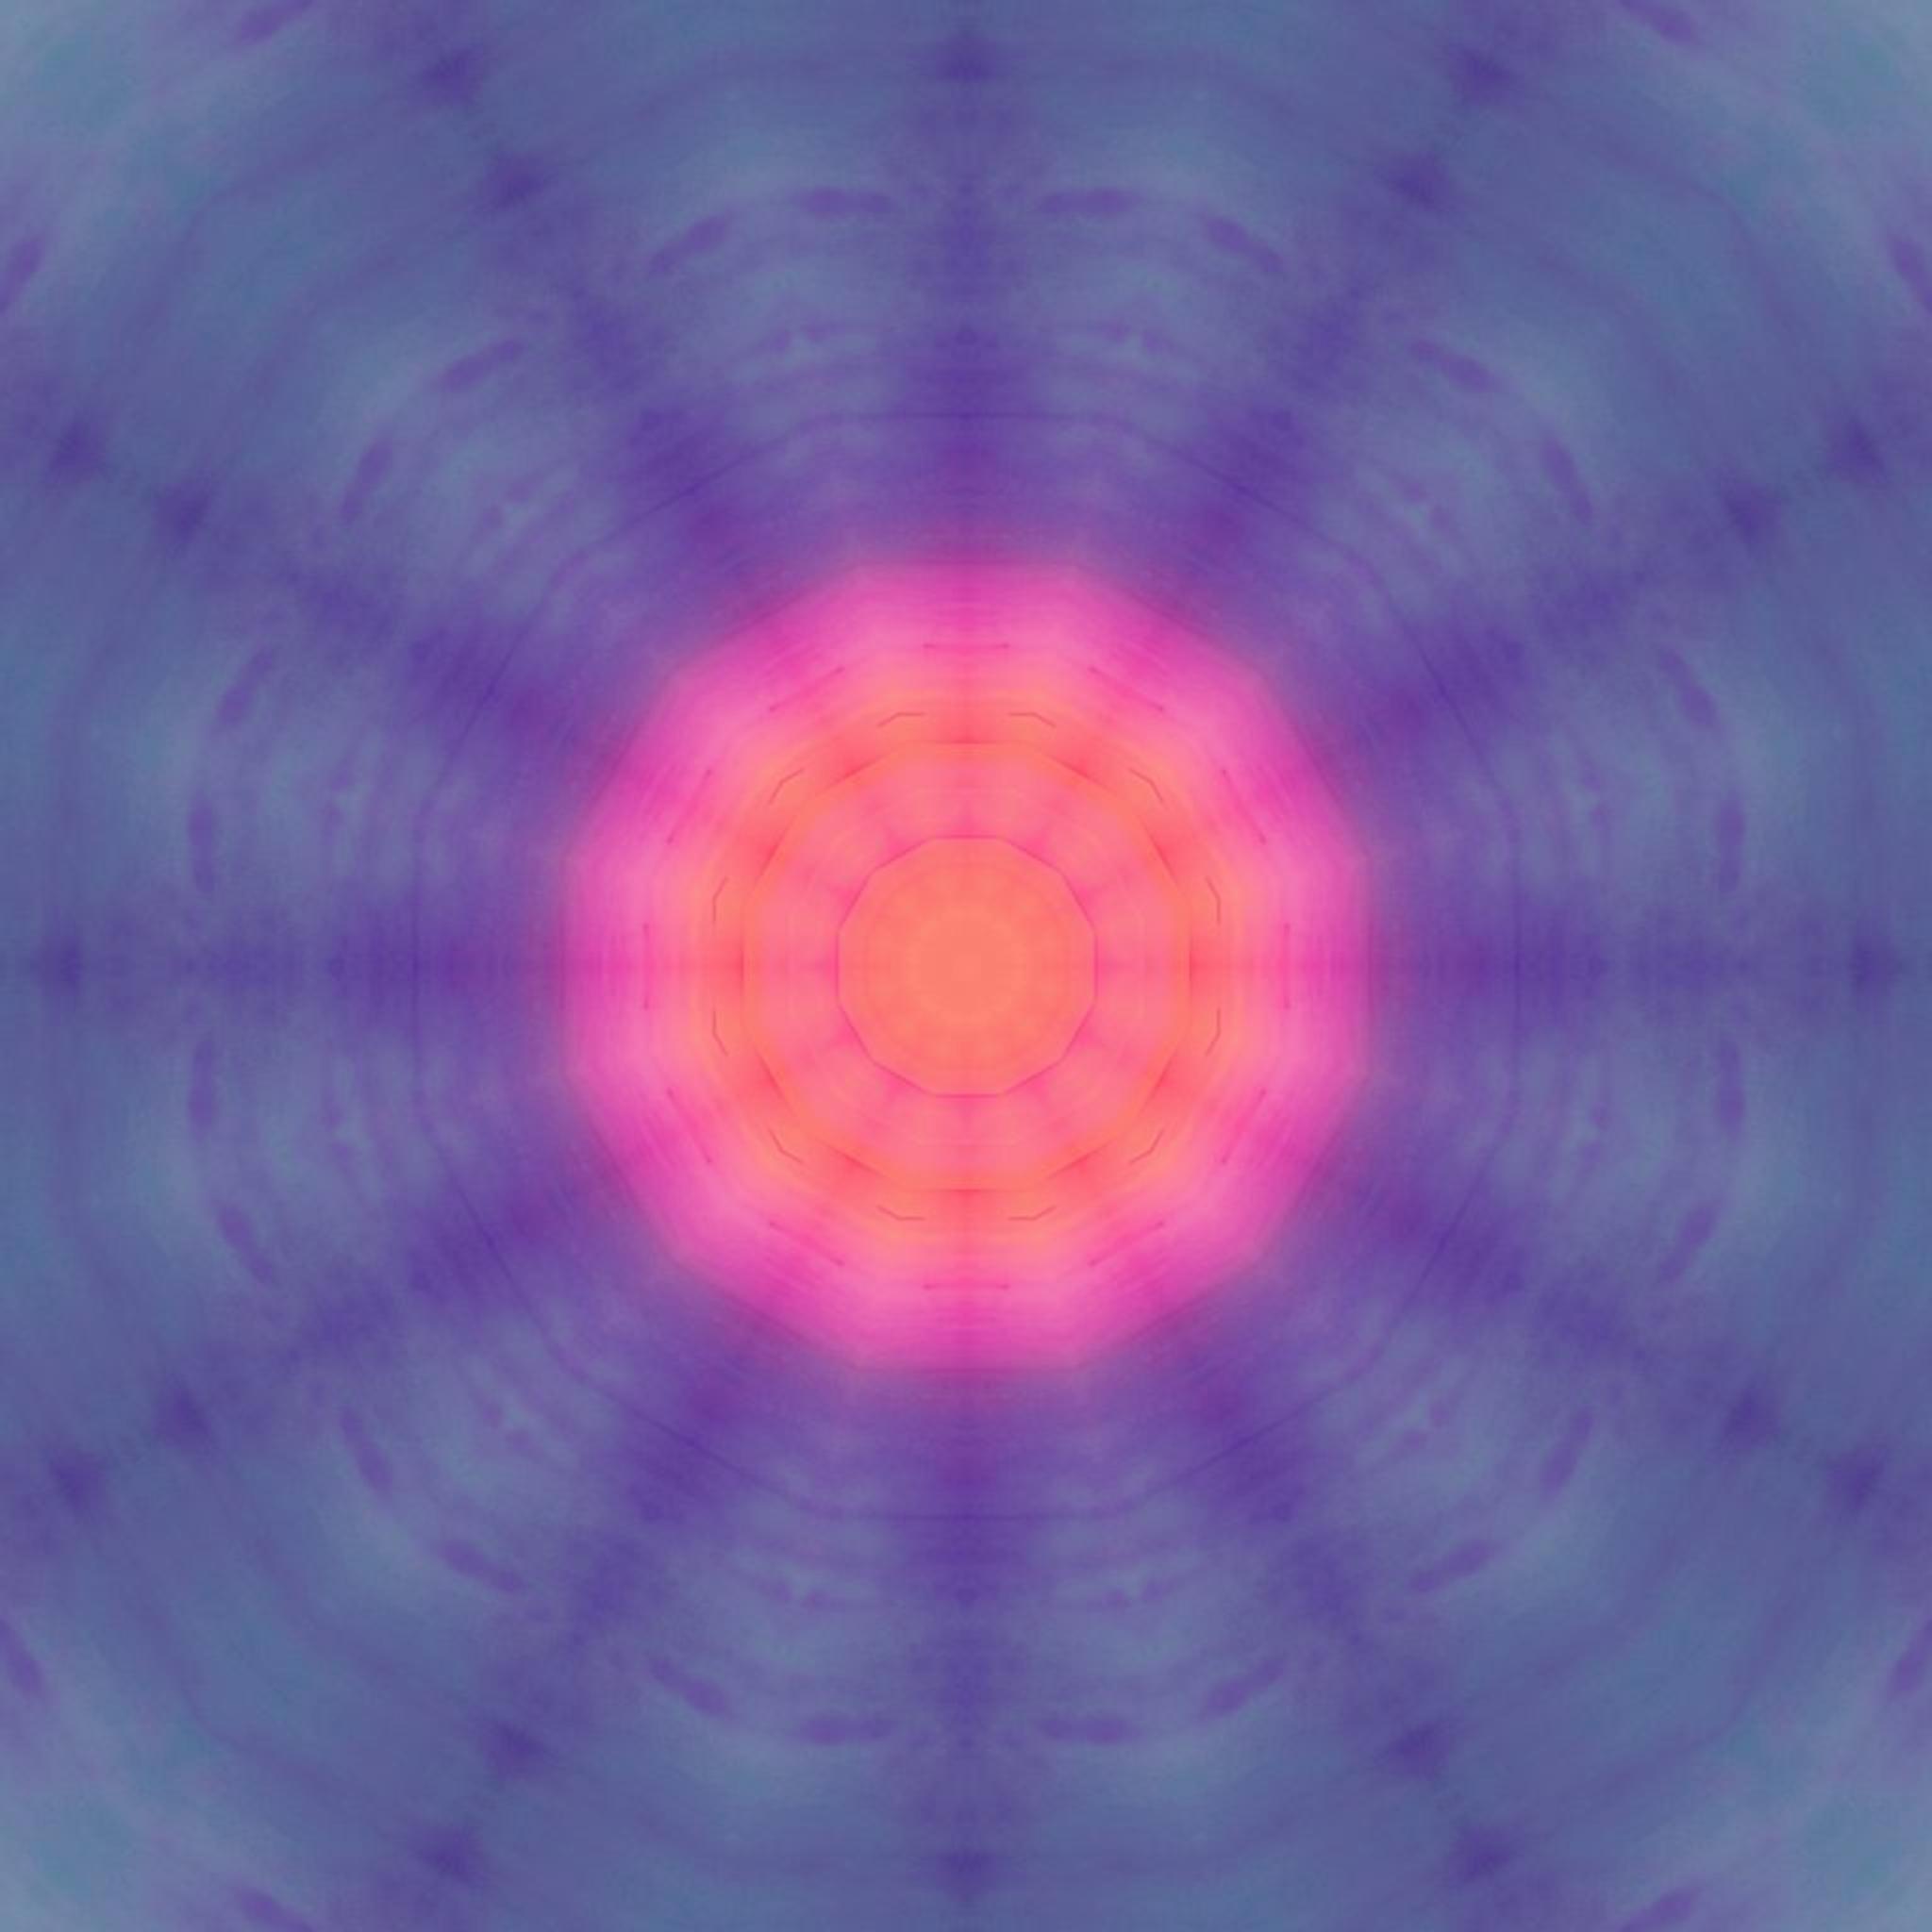 An NFT of a pink eye-like vortex.